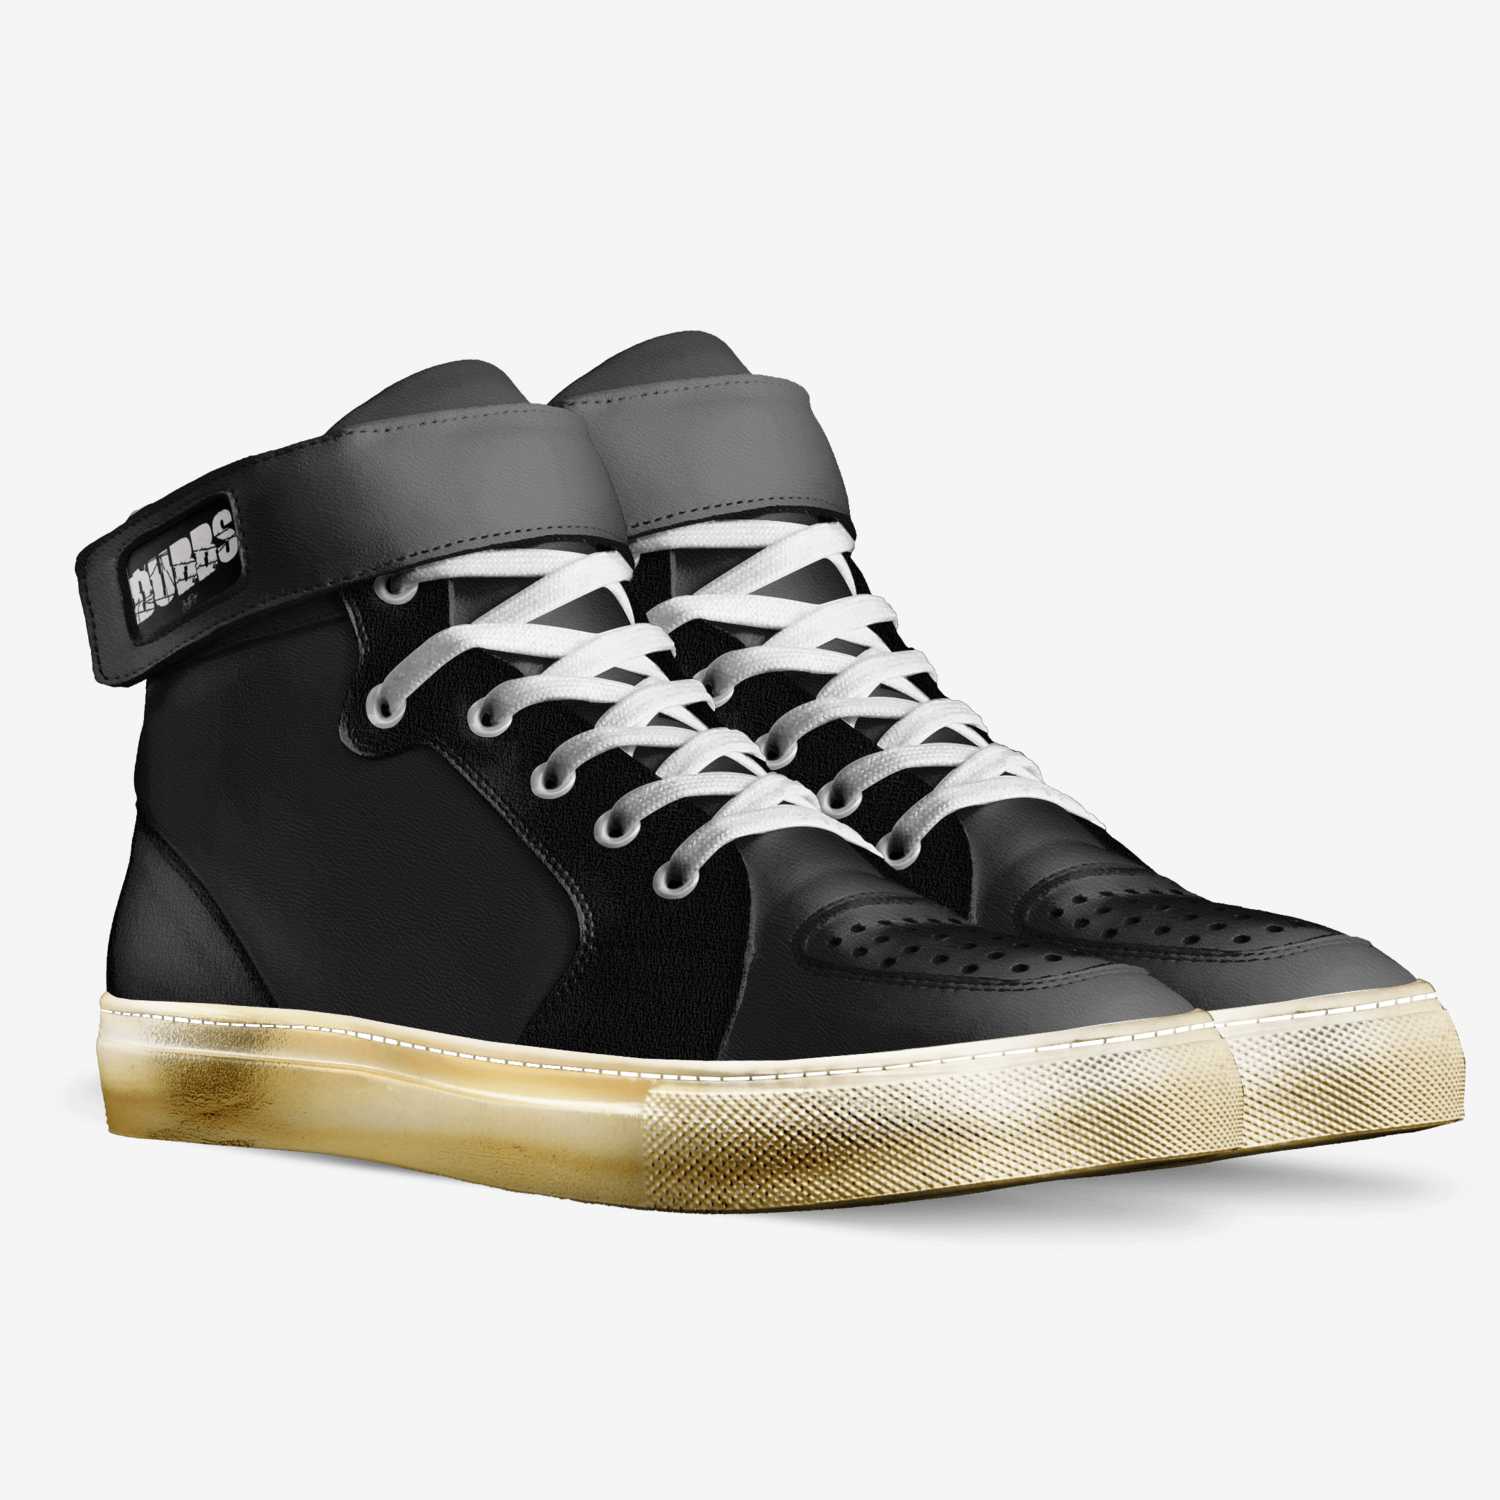 Dubbs | A Custom Shoe concept by Itz Prof